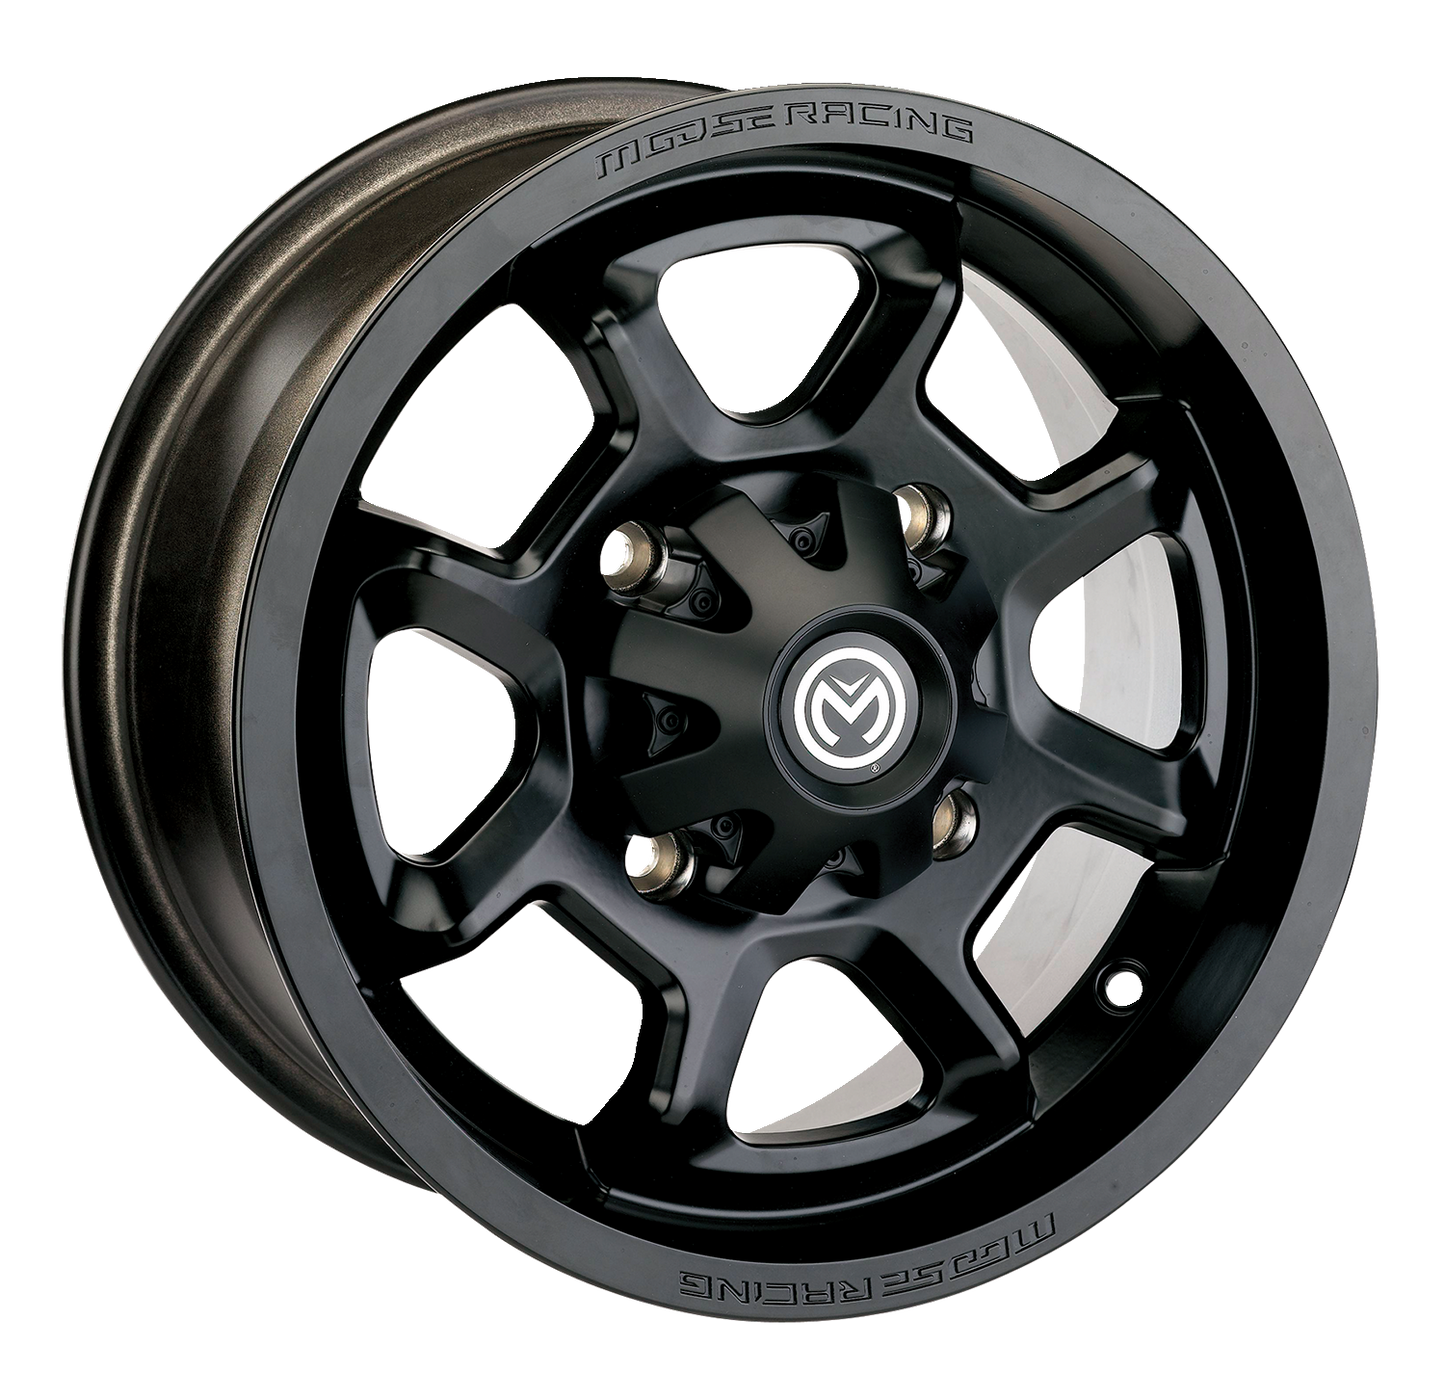 MOOSE UTILITY Wheel - 415X - Front - Black - 12x7 - 4/136 - 4+3 415MO127136MB4